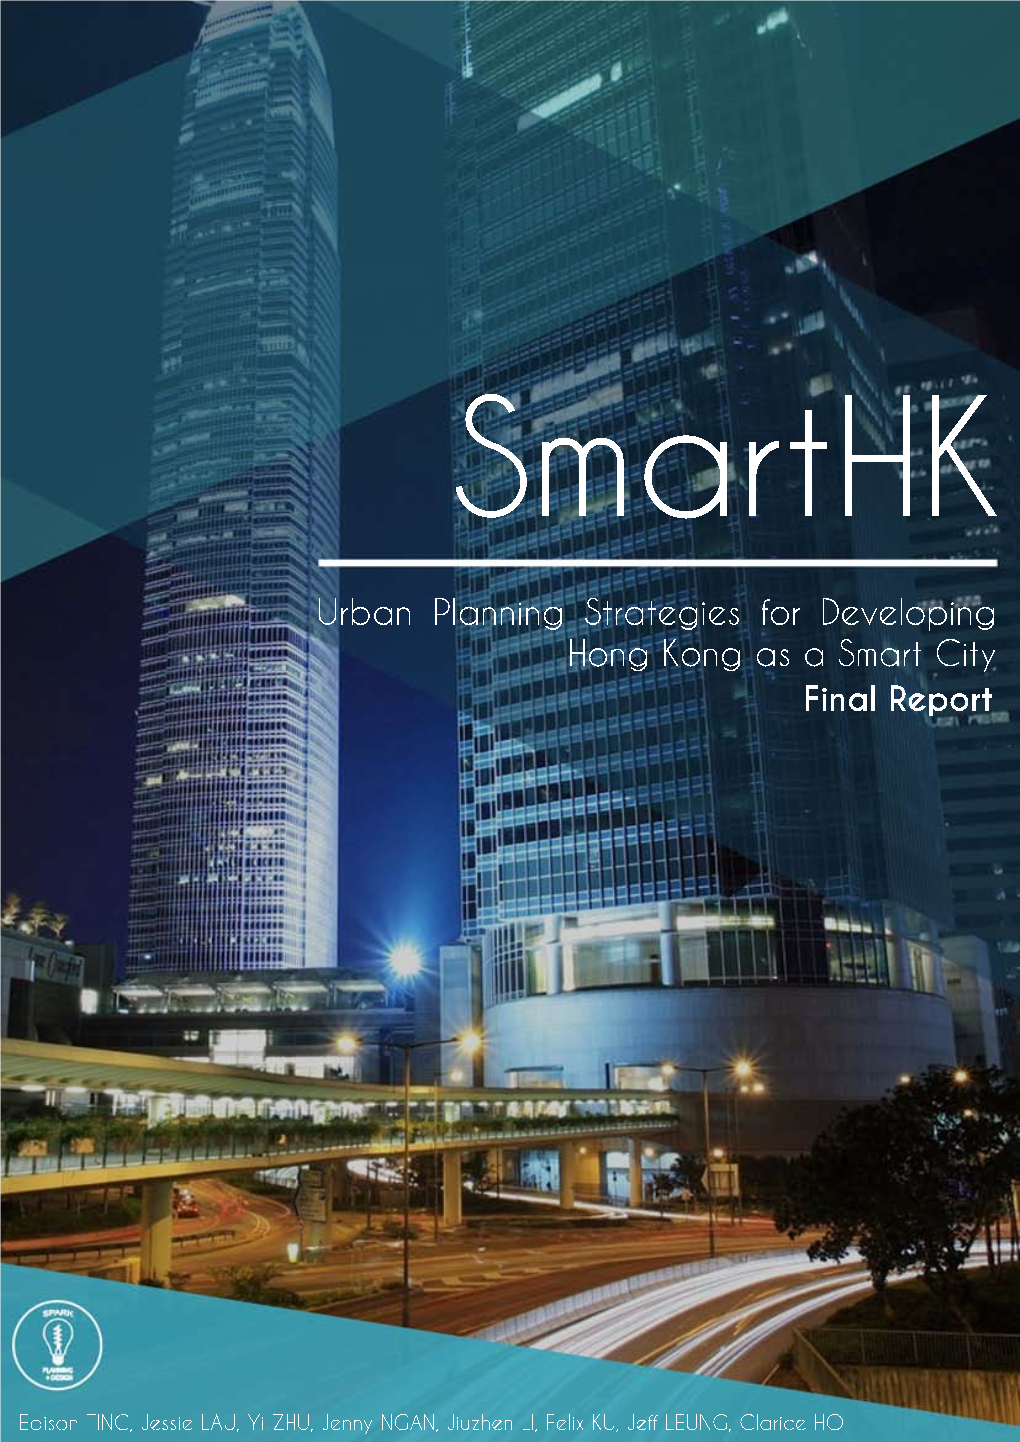 Smart City Spark